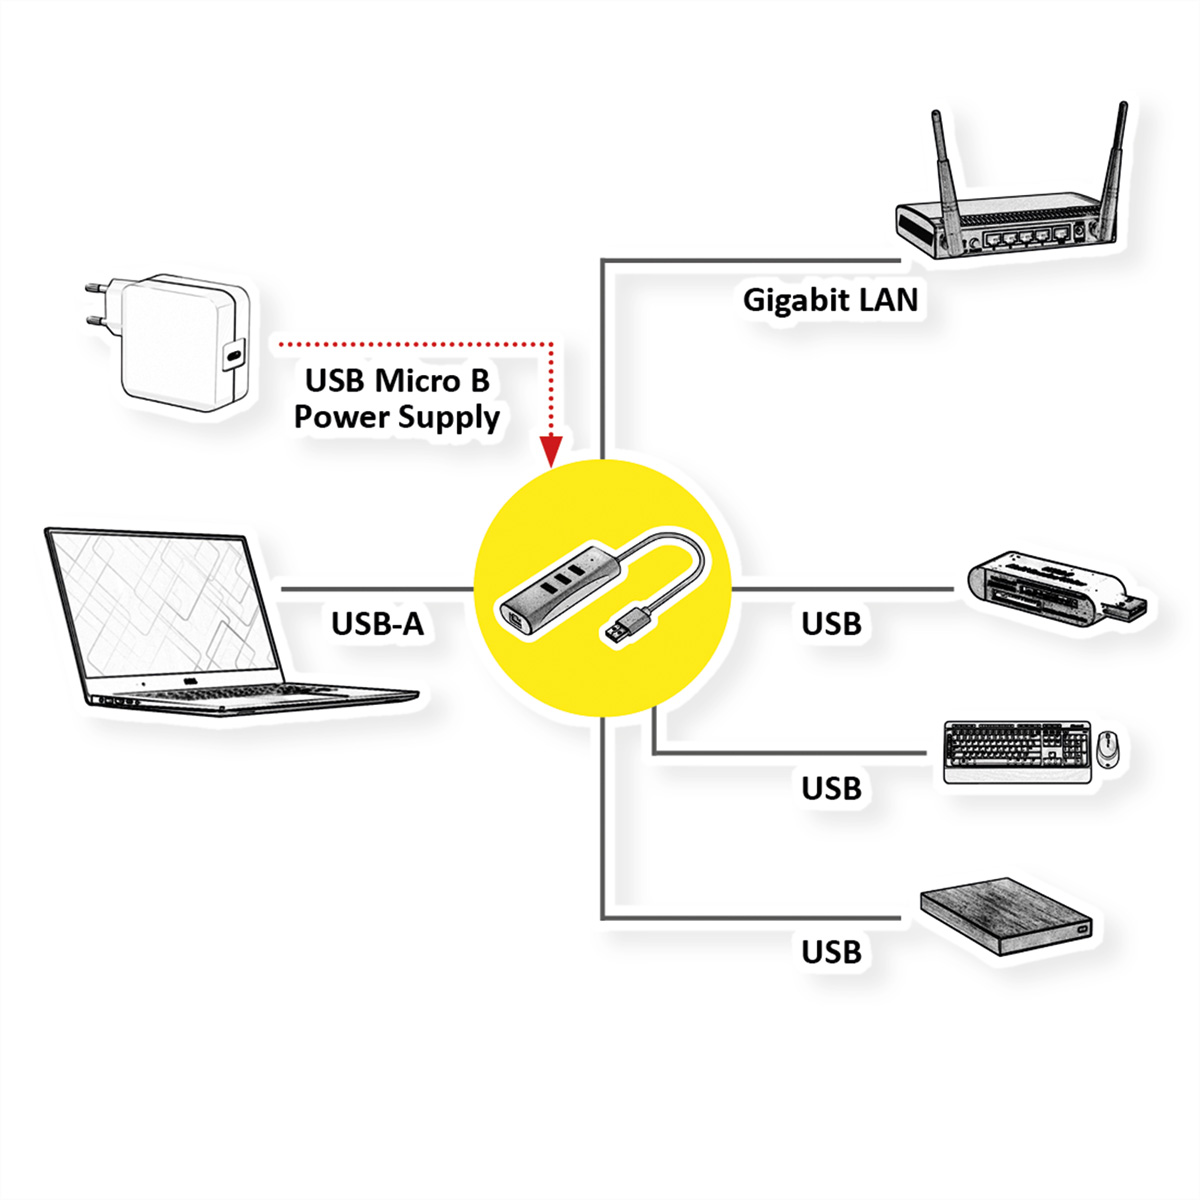 Hub 3-Port 1 Konverter zu USB Gigabit + Gen VALUE Ethernet 3.2 USB Konverter Ethernet Gigabit